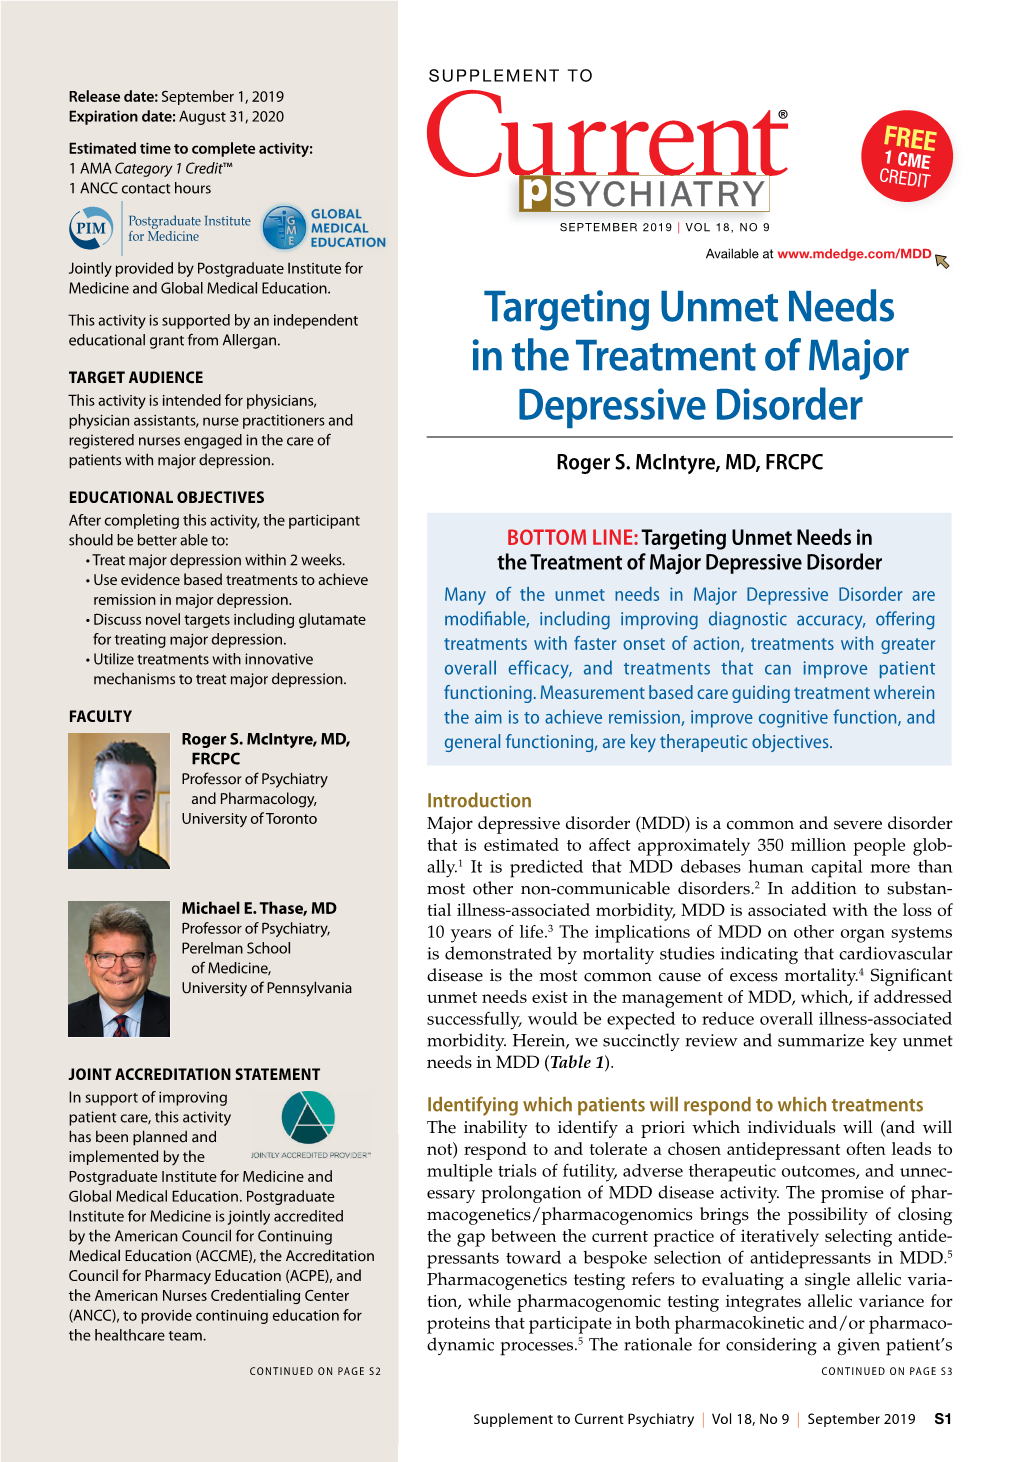 Targeting Unmet Needs in the Treatment of Major Depressive Disorder